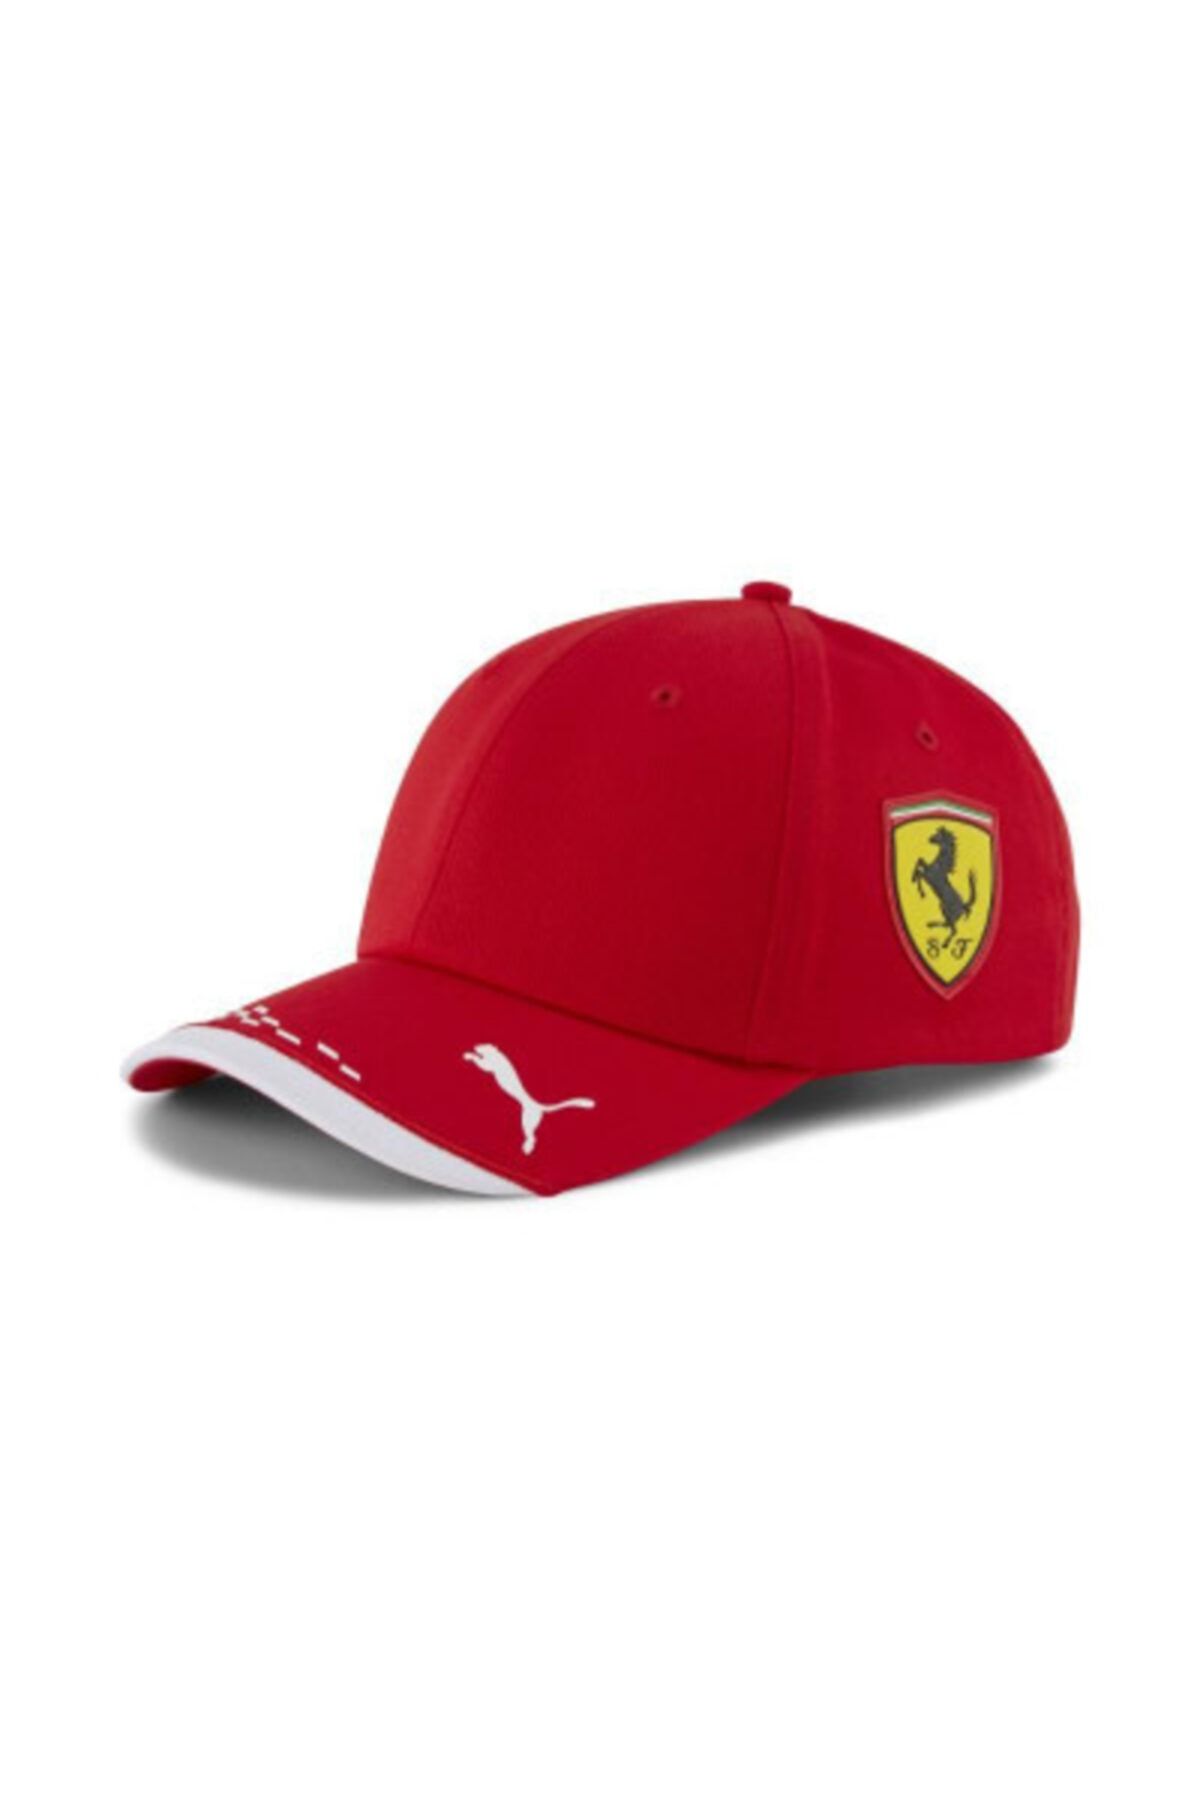 Puma -sf Ferrari Team Cap -şapka